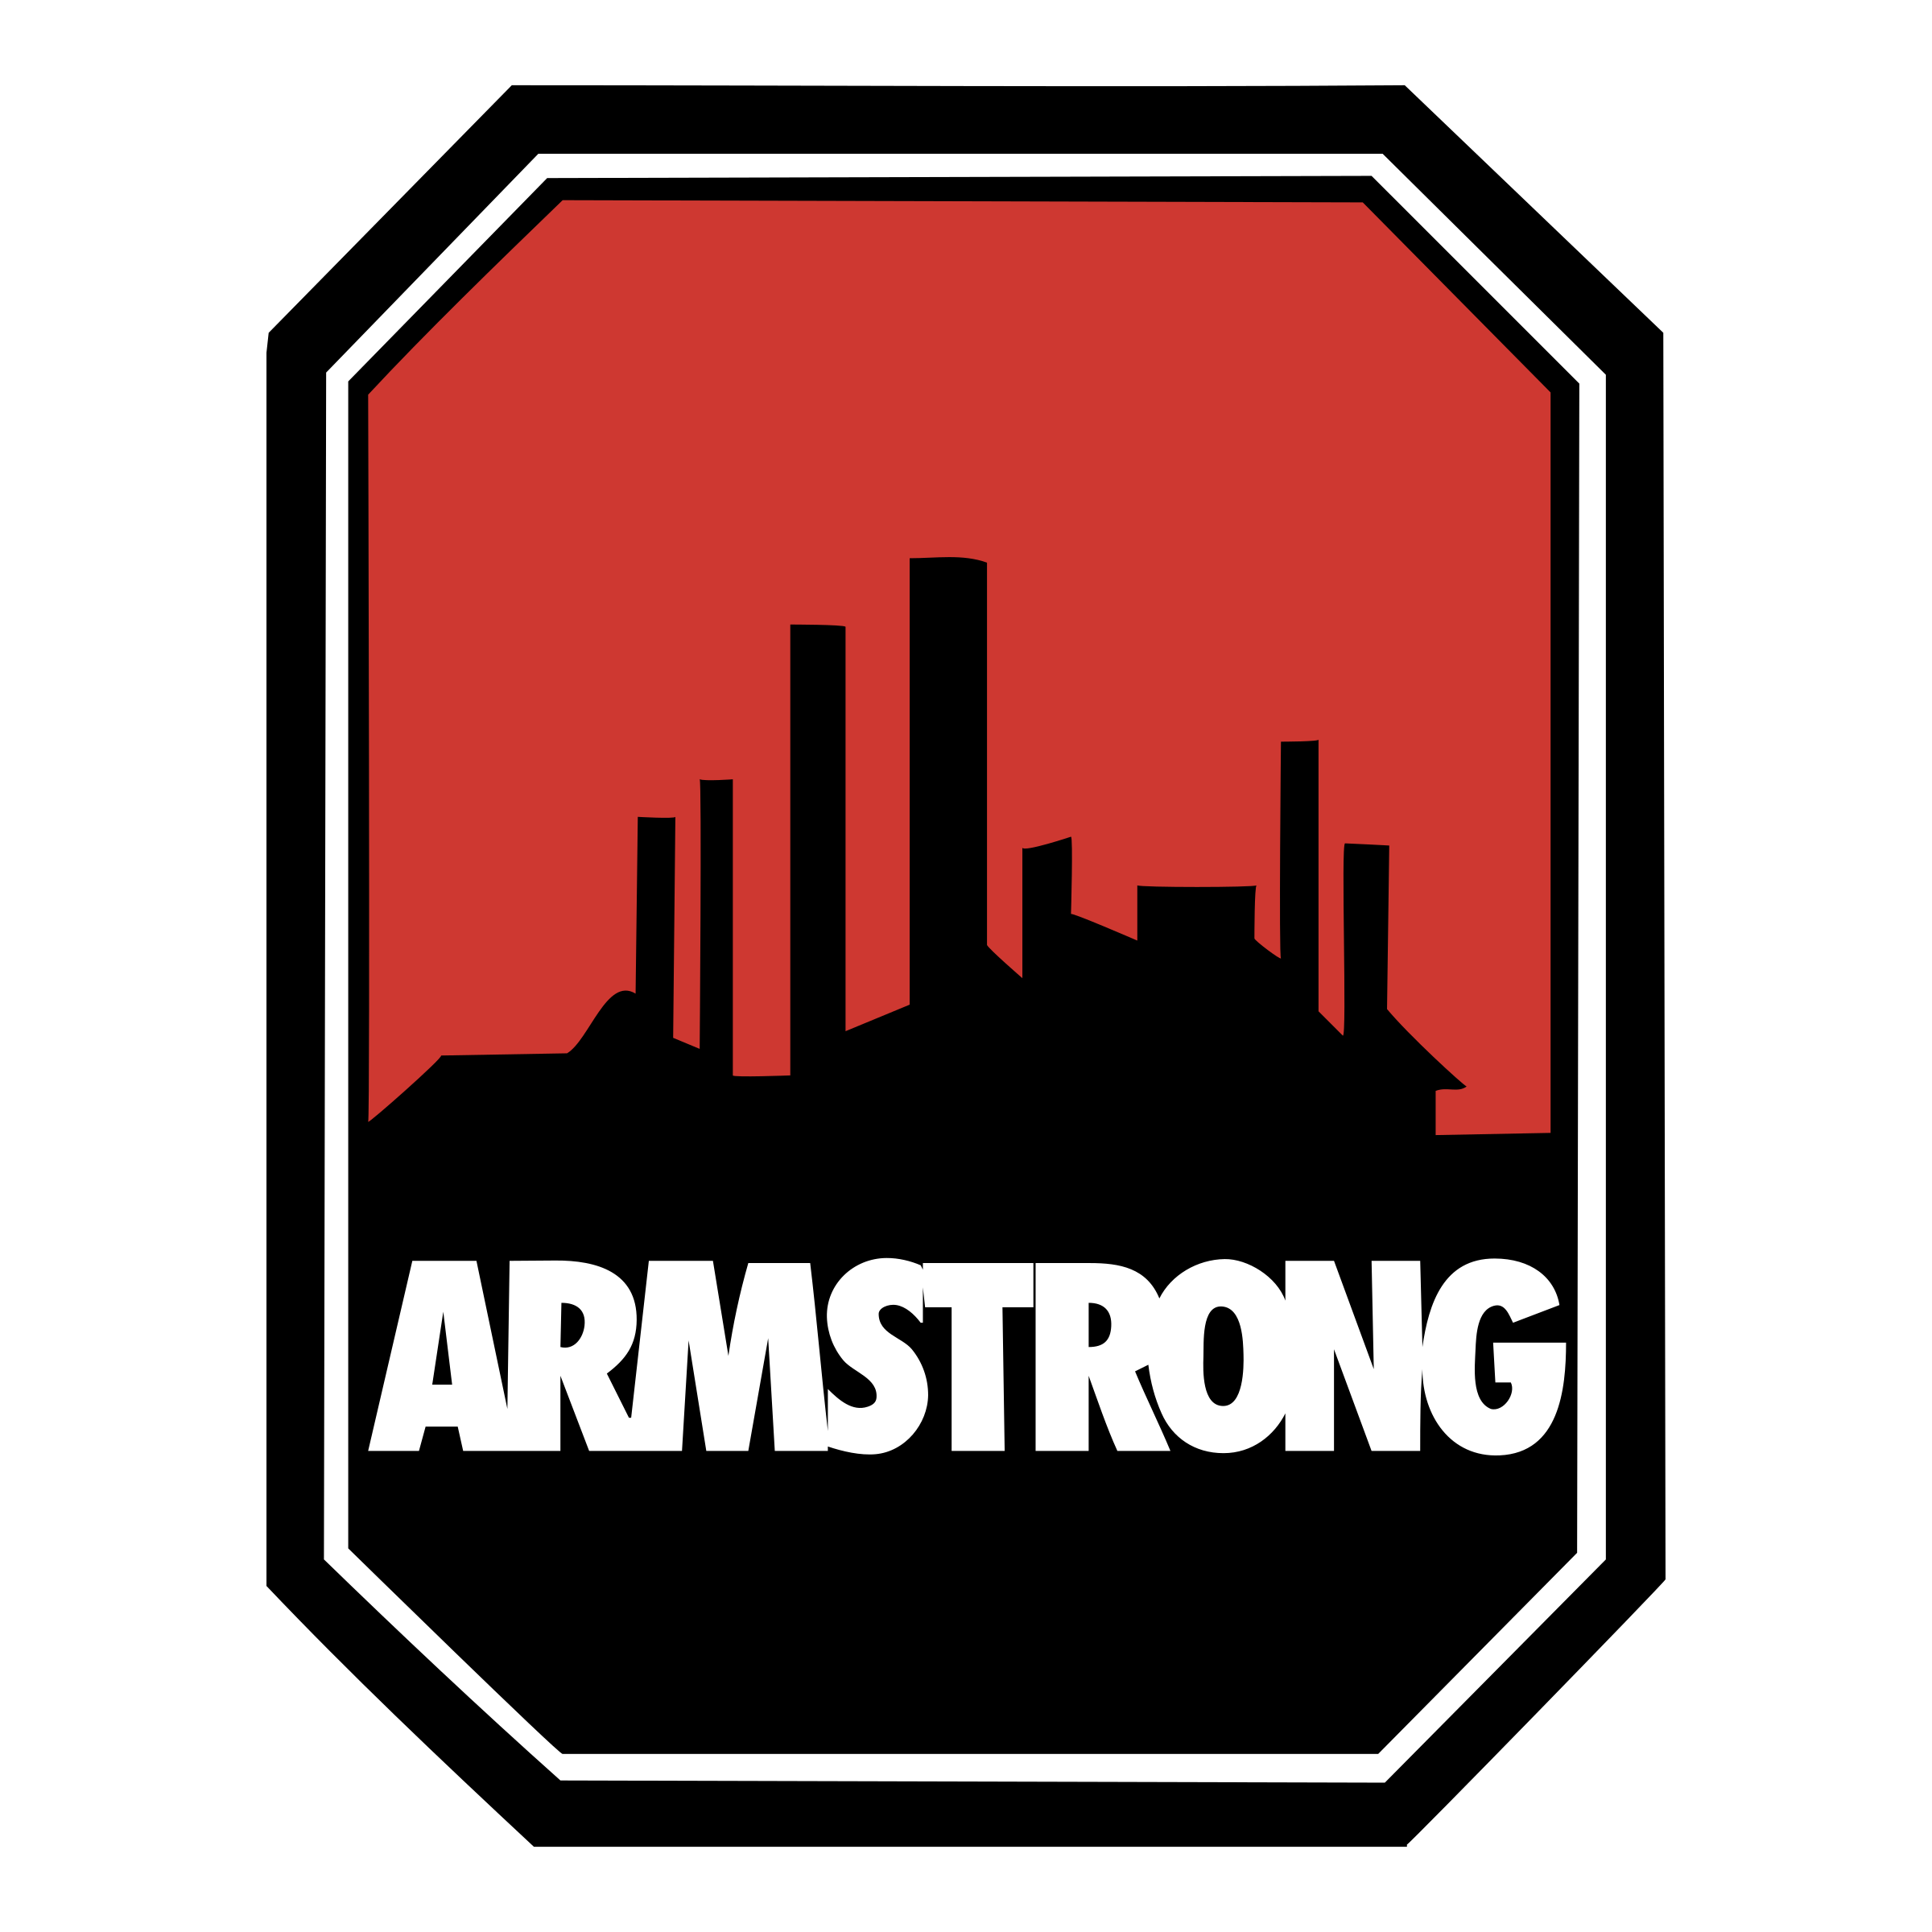 armstrong-pumps-logo-png-transparent.png